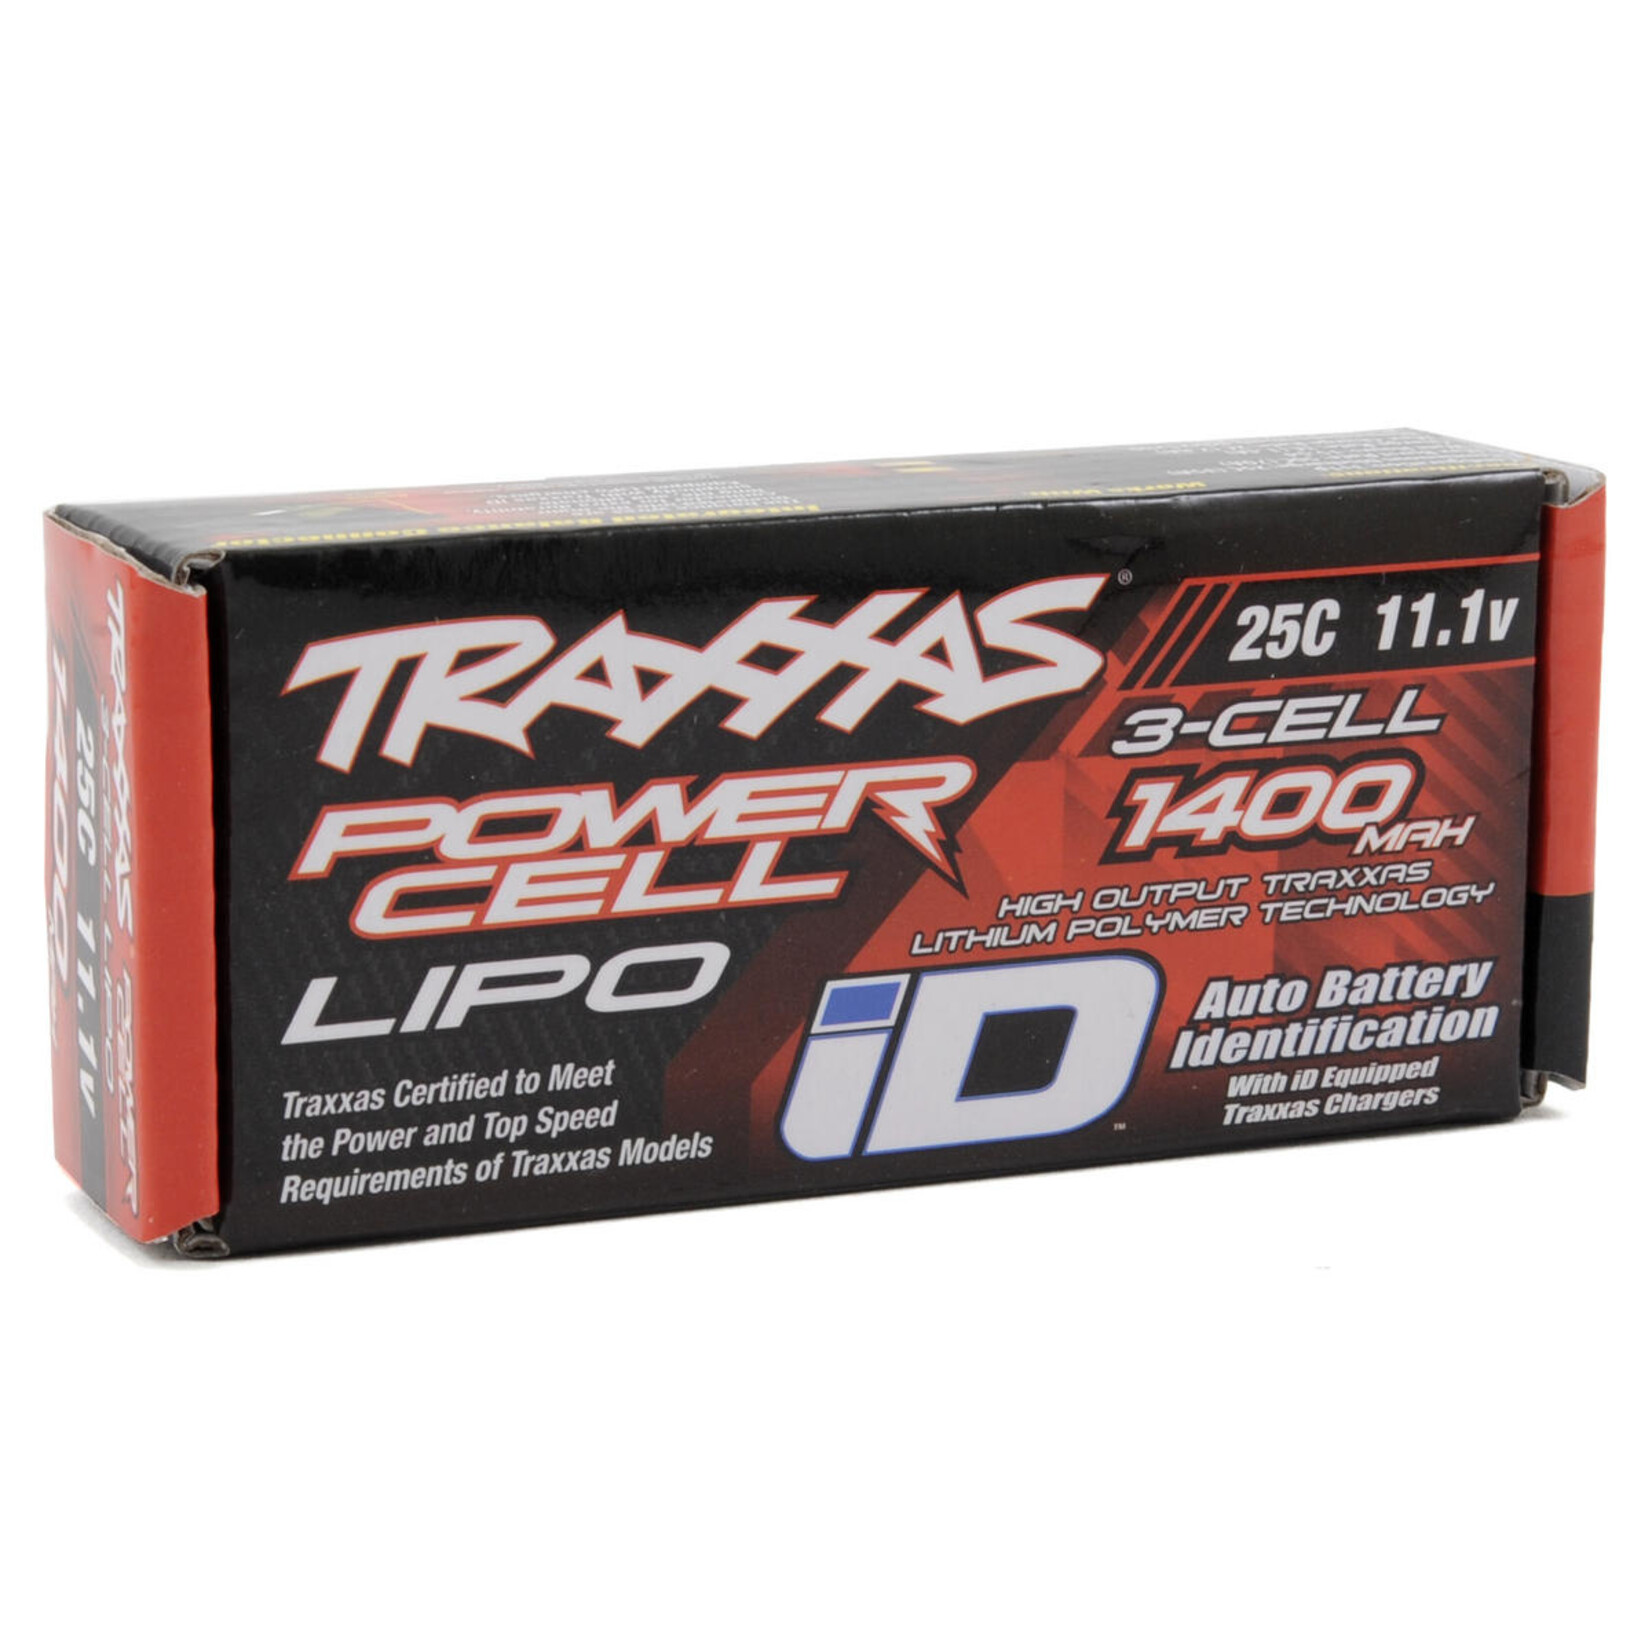 Traxxas Traxxas 3S "Power Cell" 25C LiPo Battery w/iD Traxxas Connector (11.1V/1400mAh) #2823X